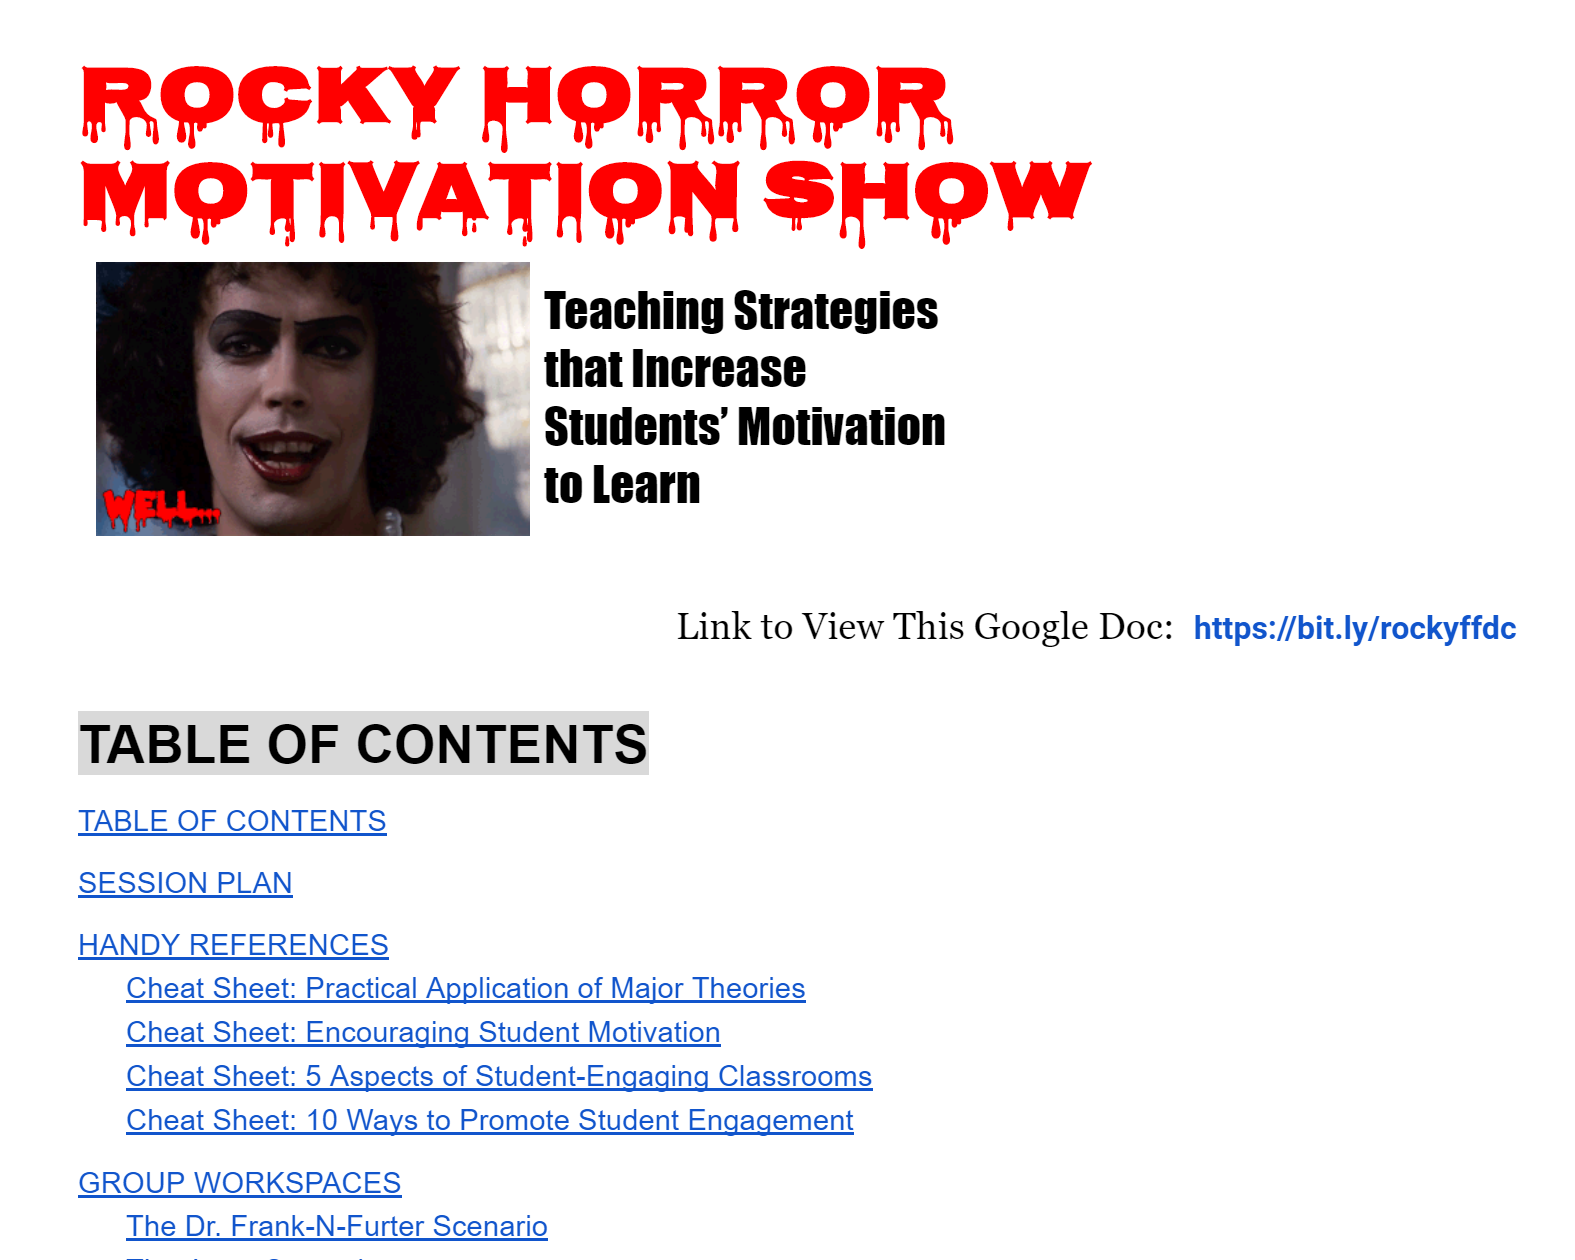 The Rocky Horror Motivation Show